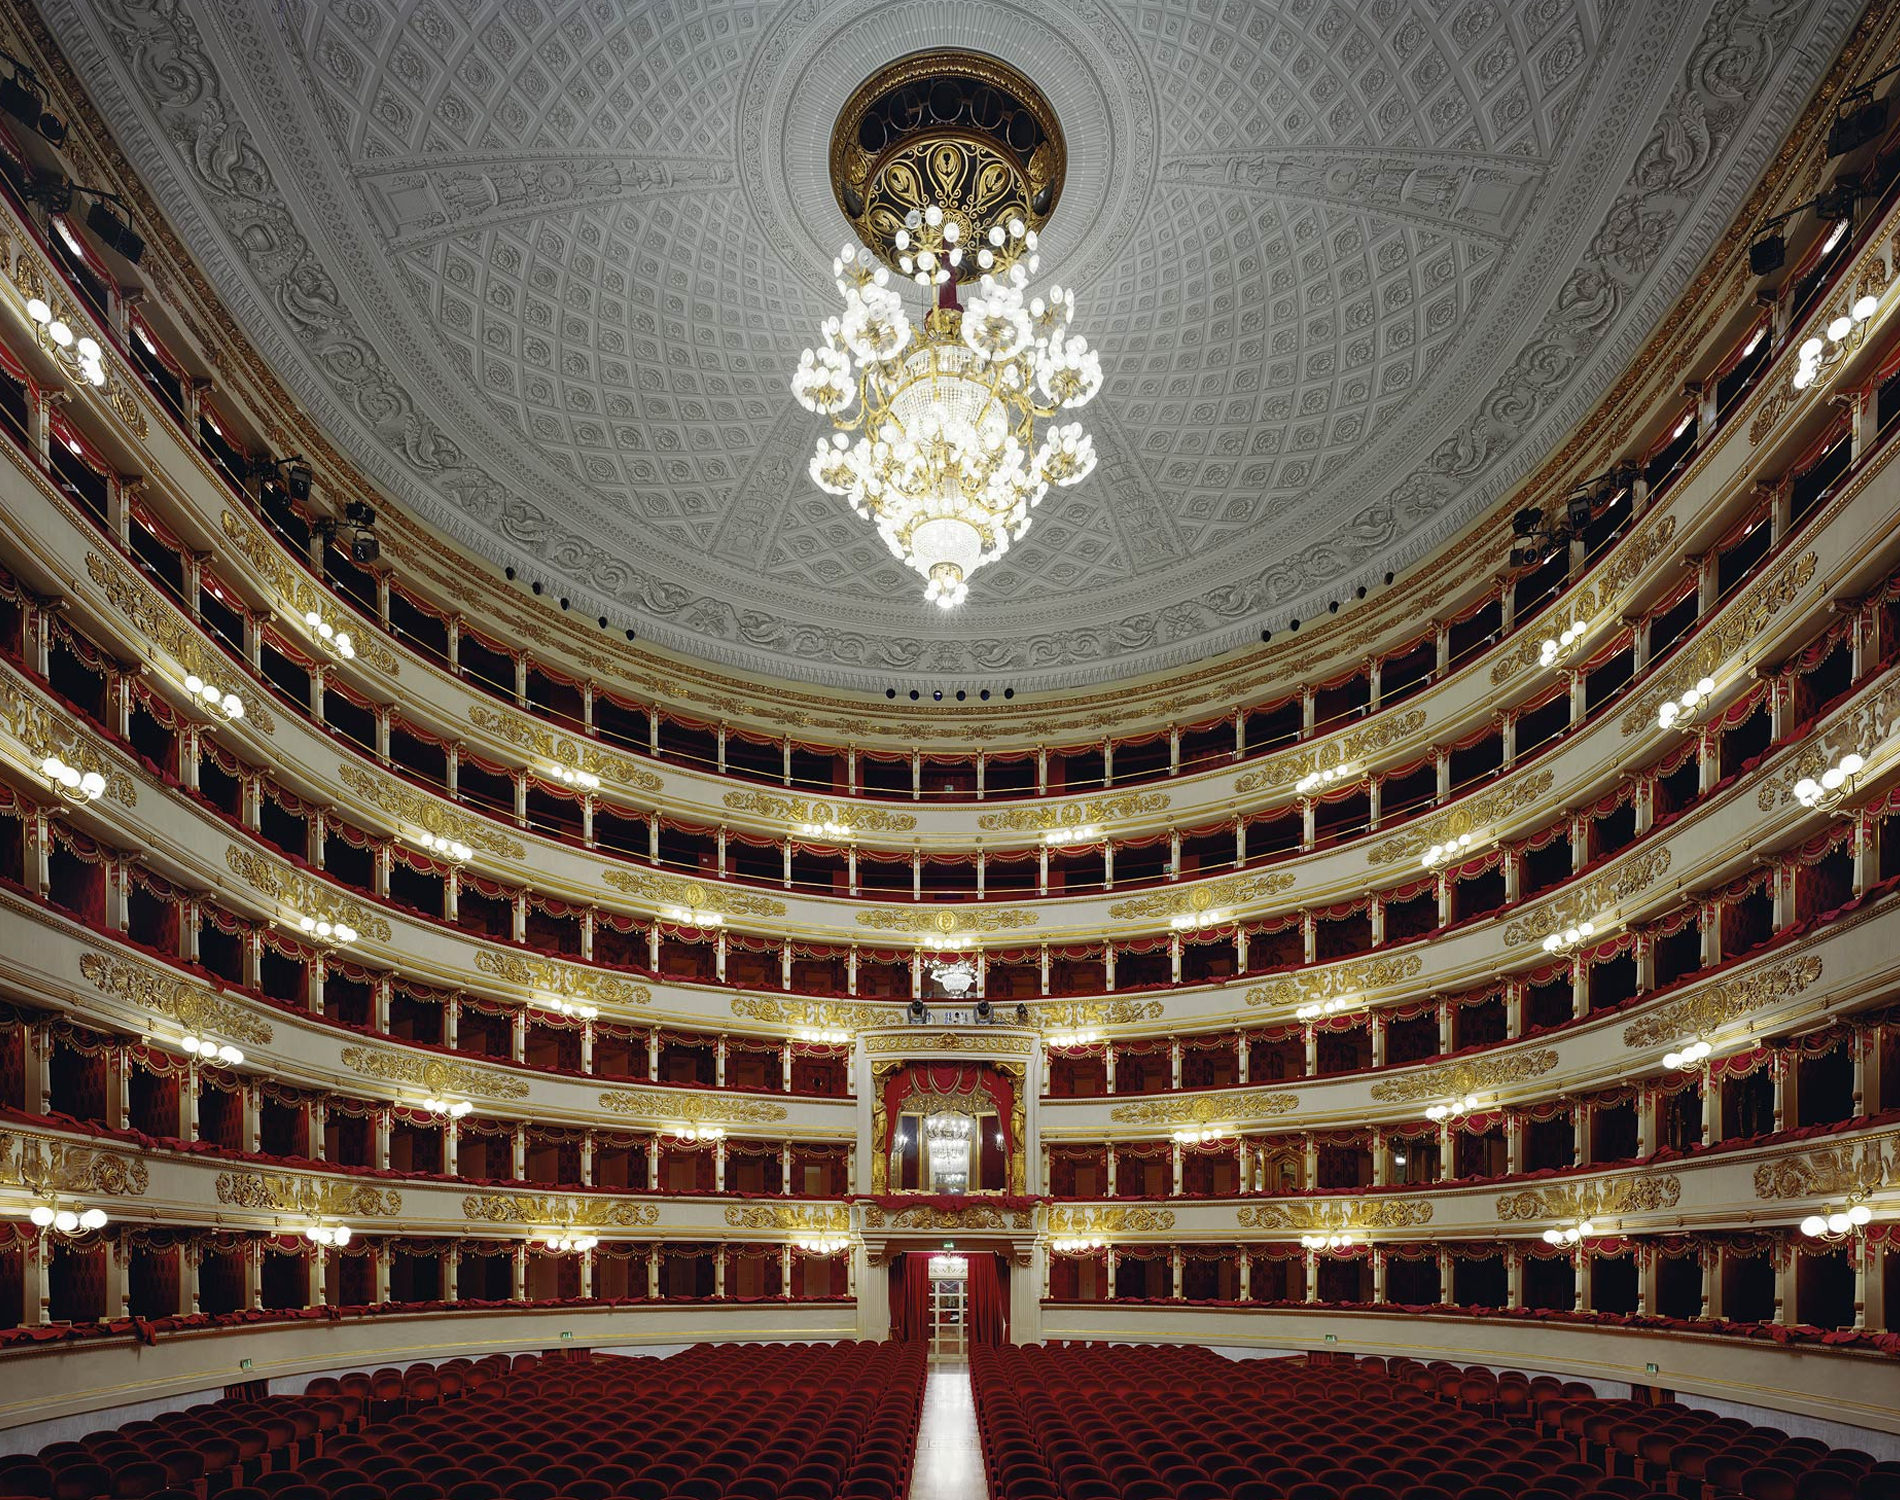 David Leventi Serie Photographie Opera Teatro Alla Scala Milan Italie 2008